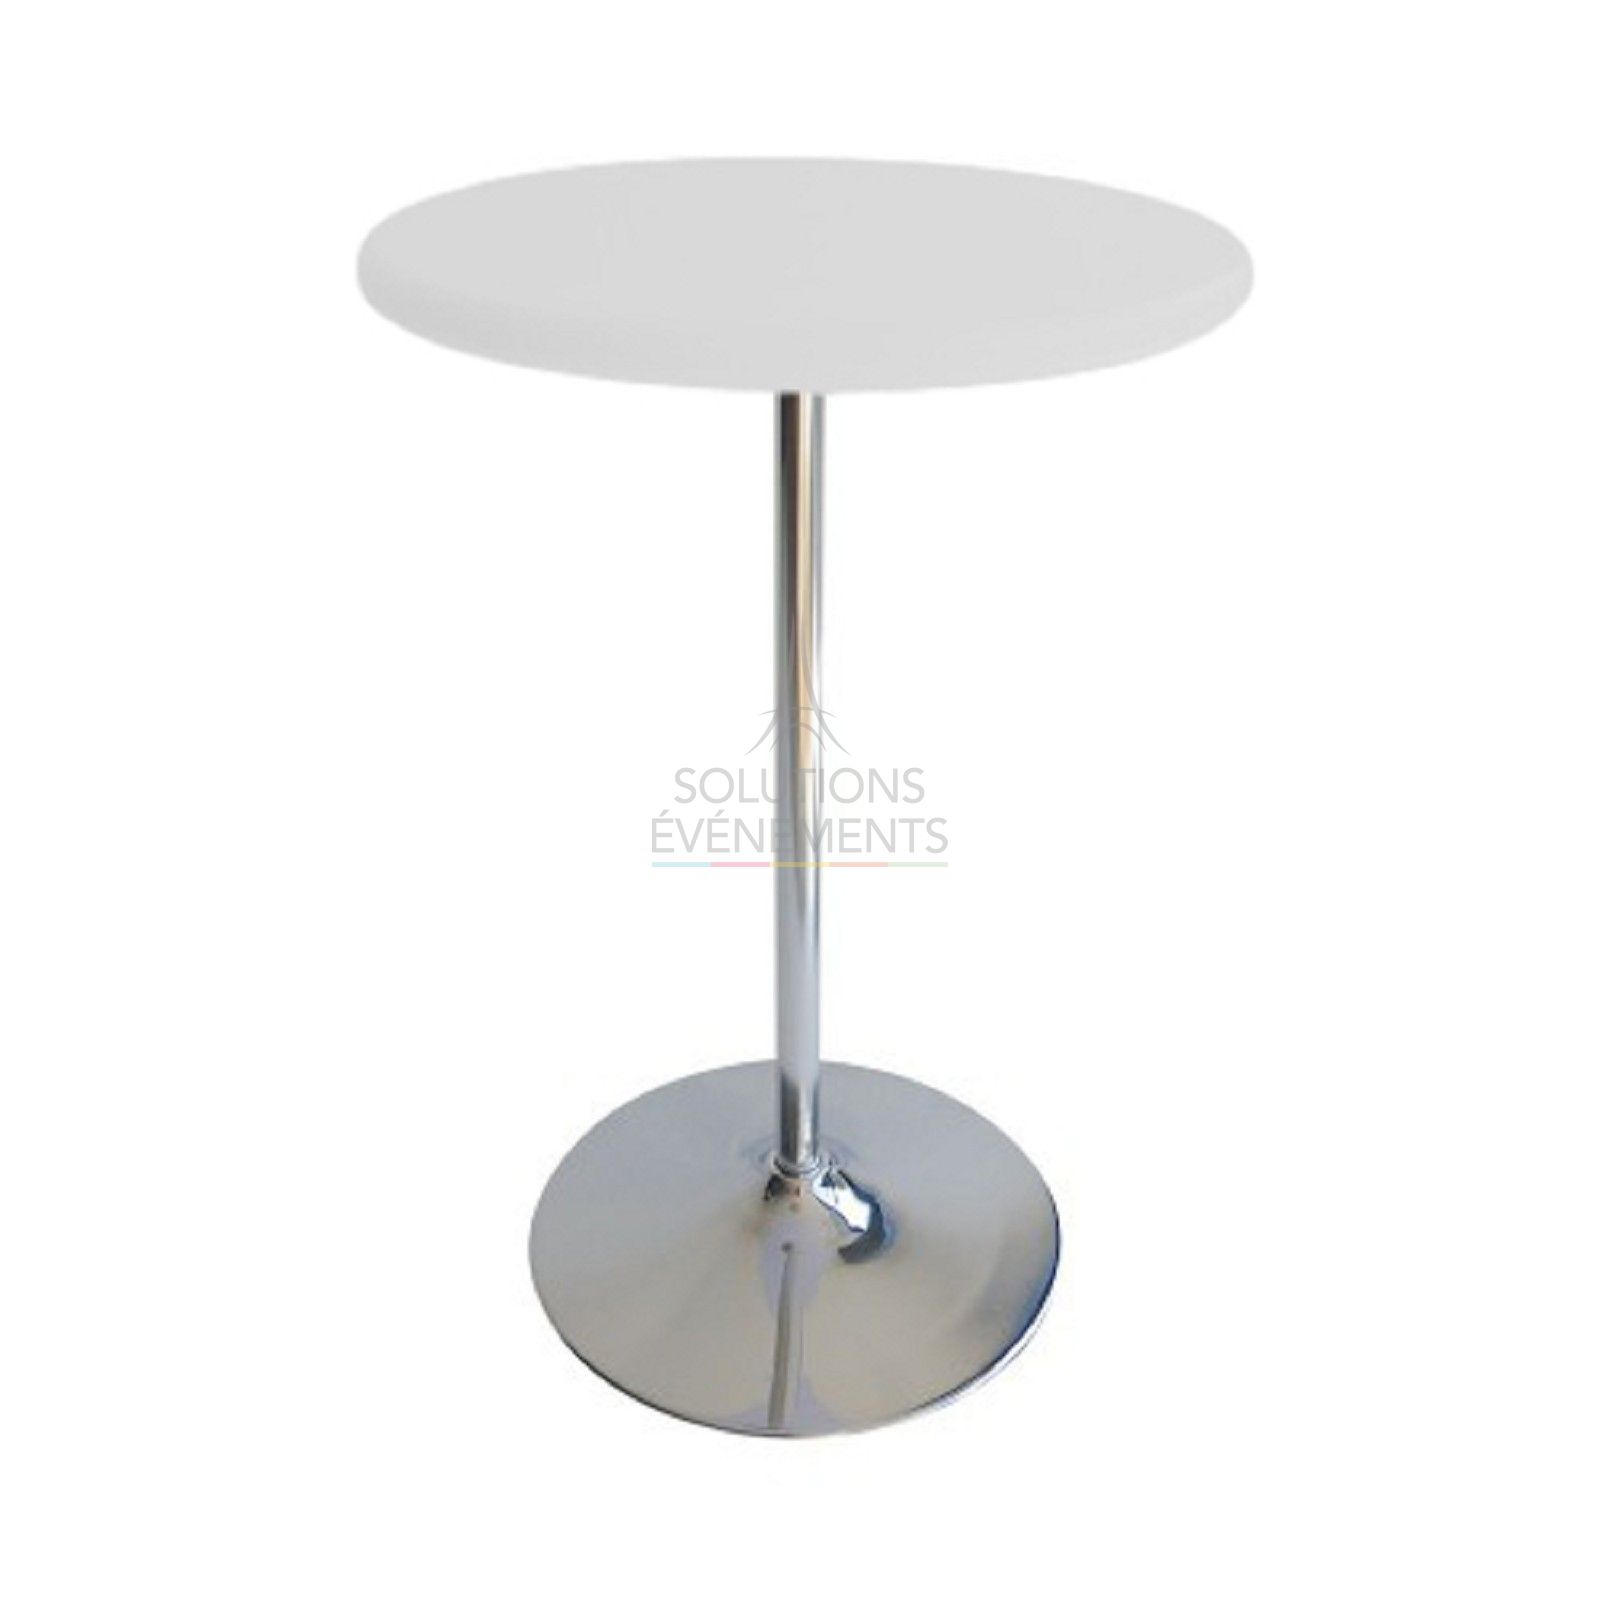 Rental of high standing dining table diameter 70cm